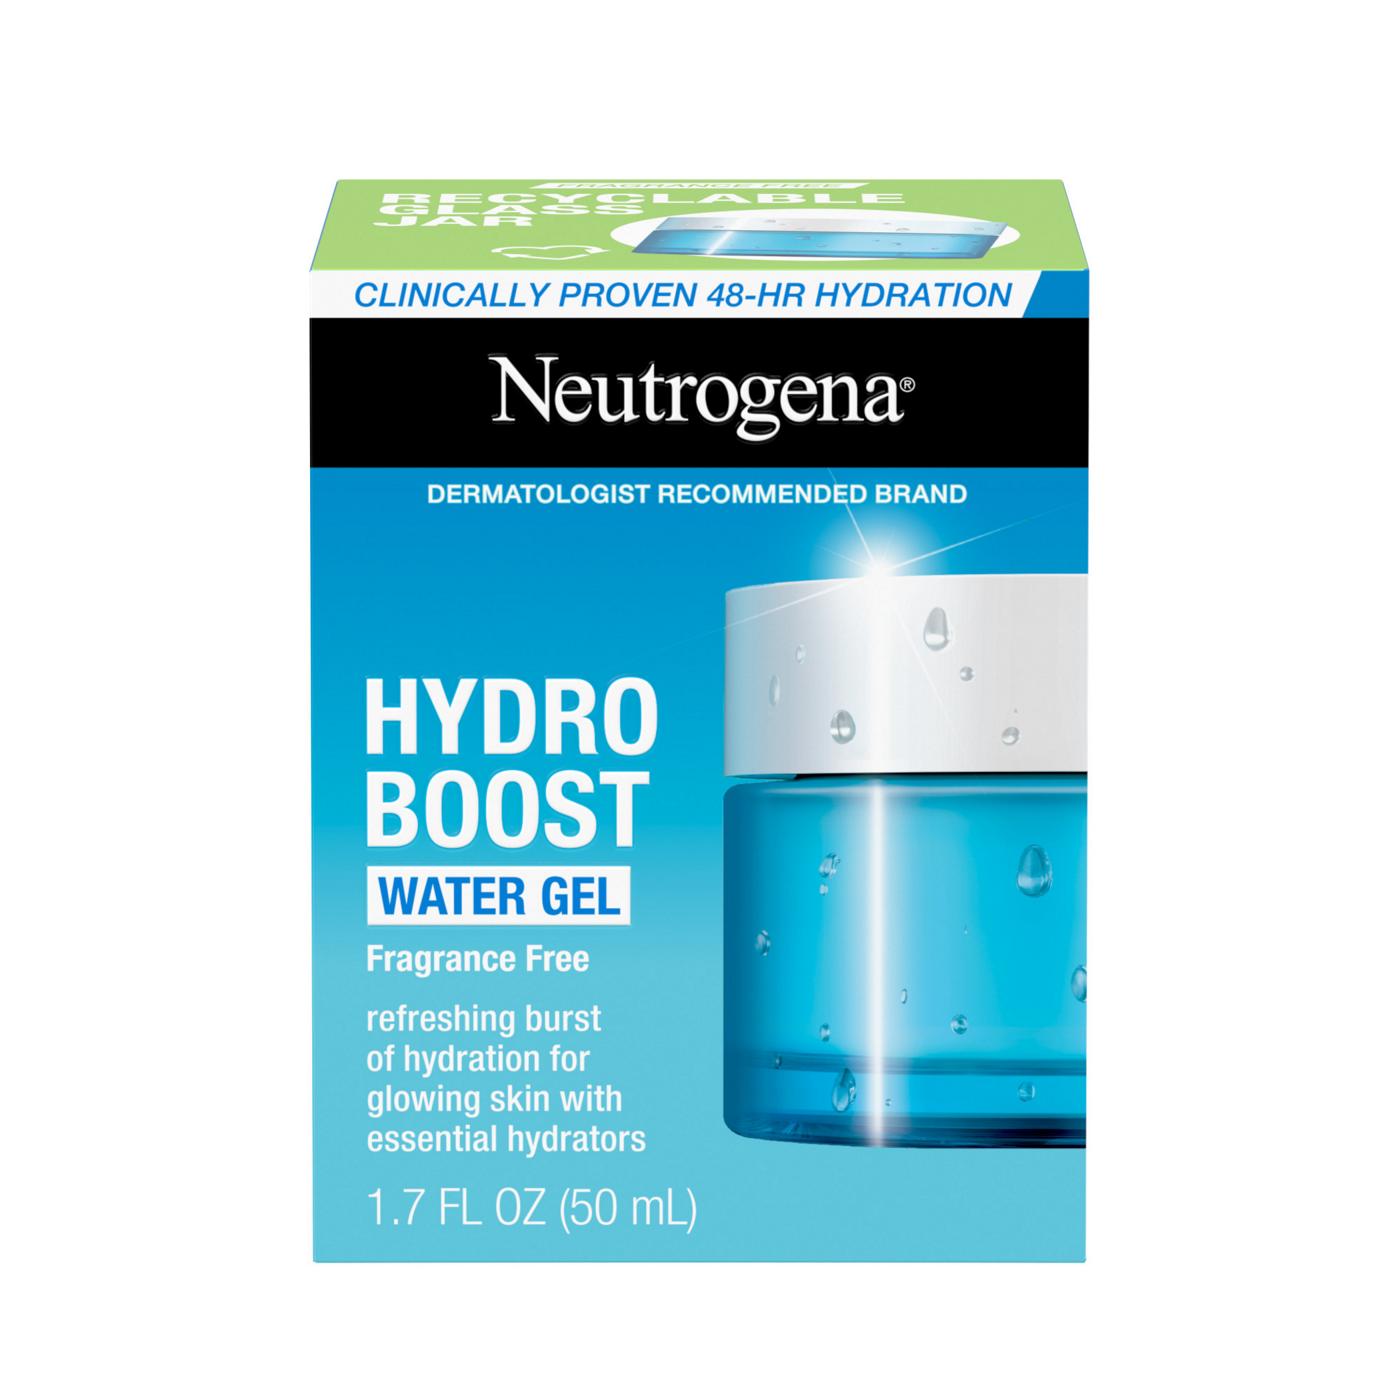 Neutrogena Hydro Boost Water Gel; image 1 of 8